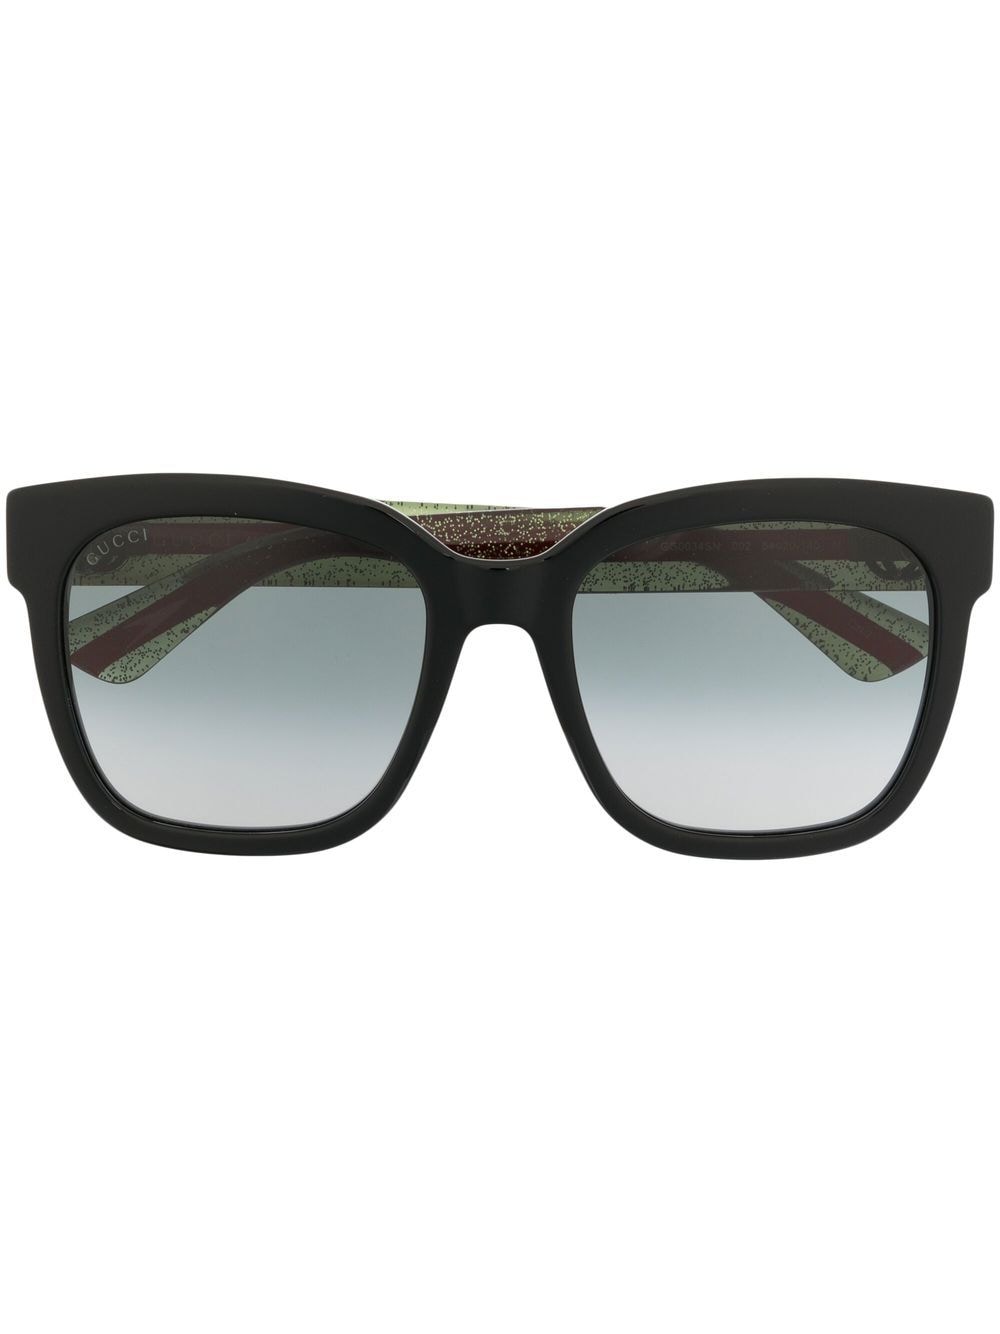 Bild 1 av Gucci Eyewear tonade fyrkantiga solglasögon